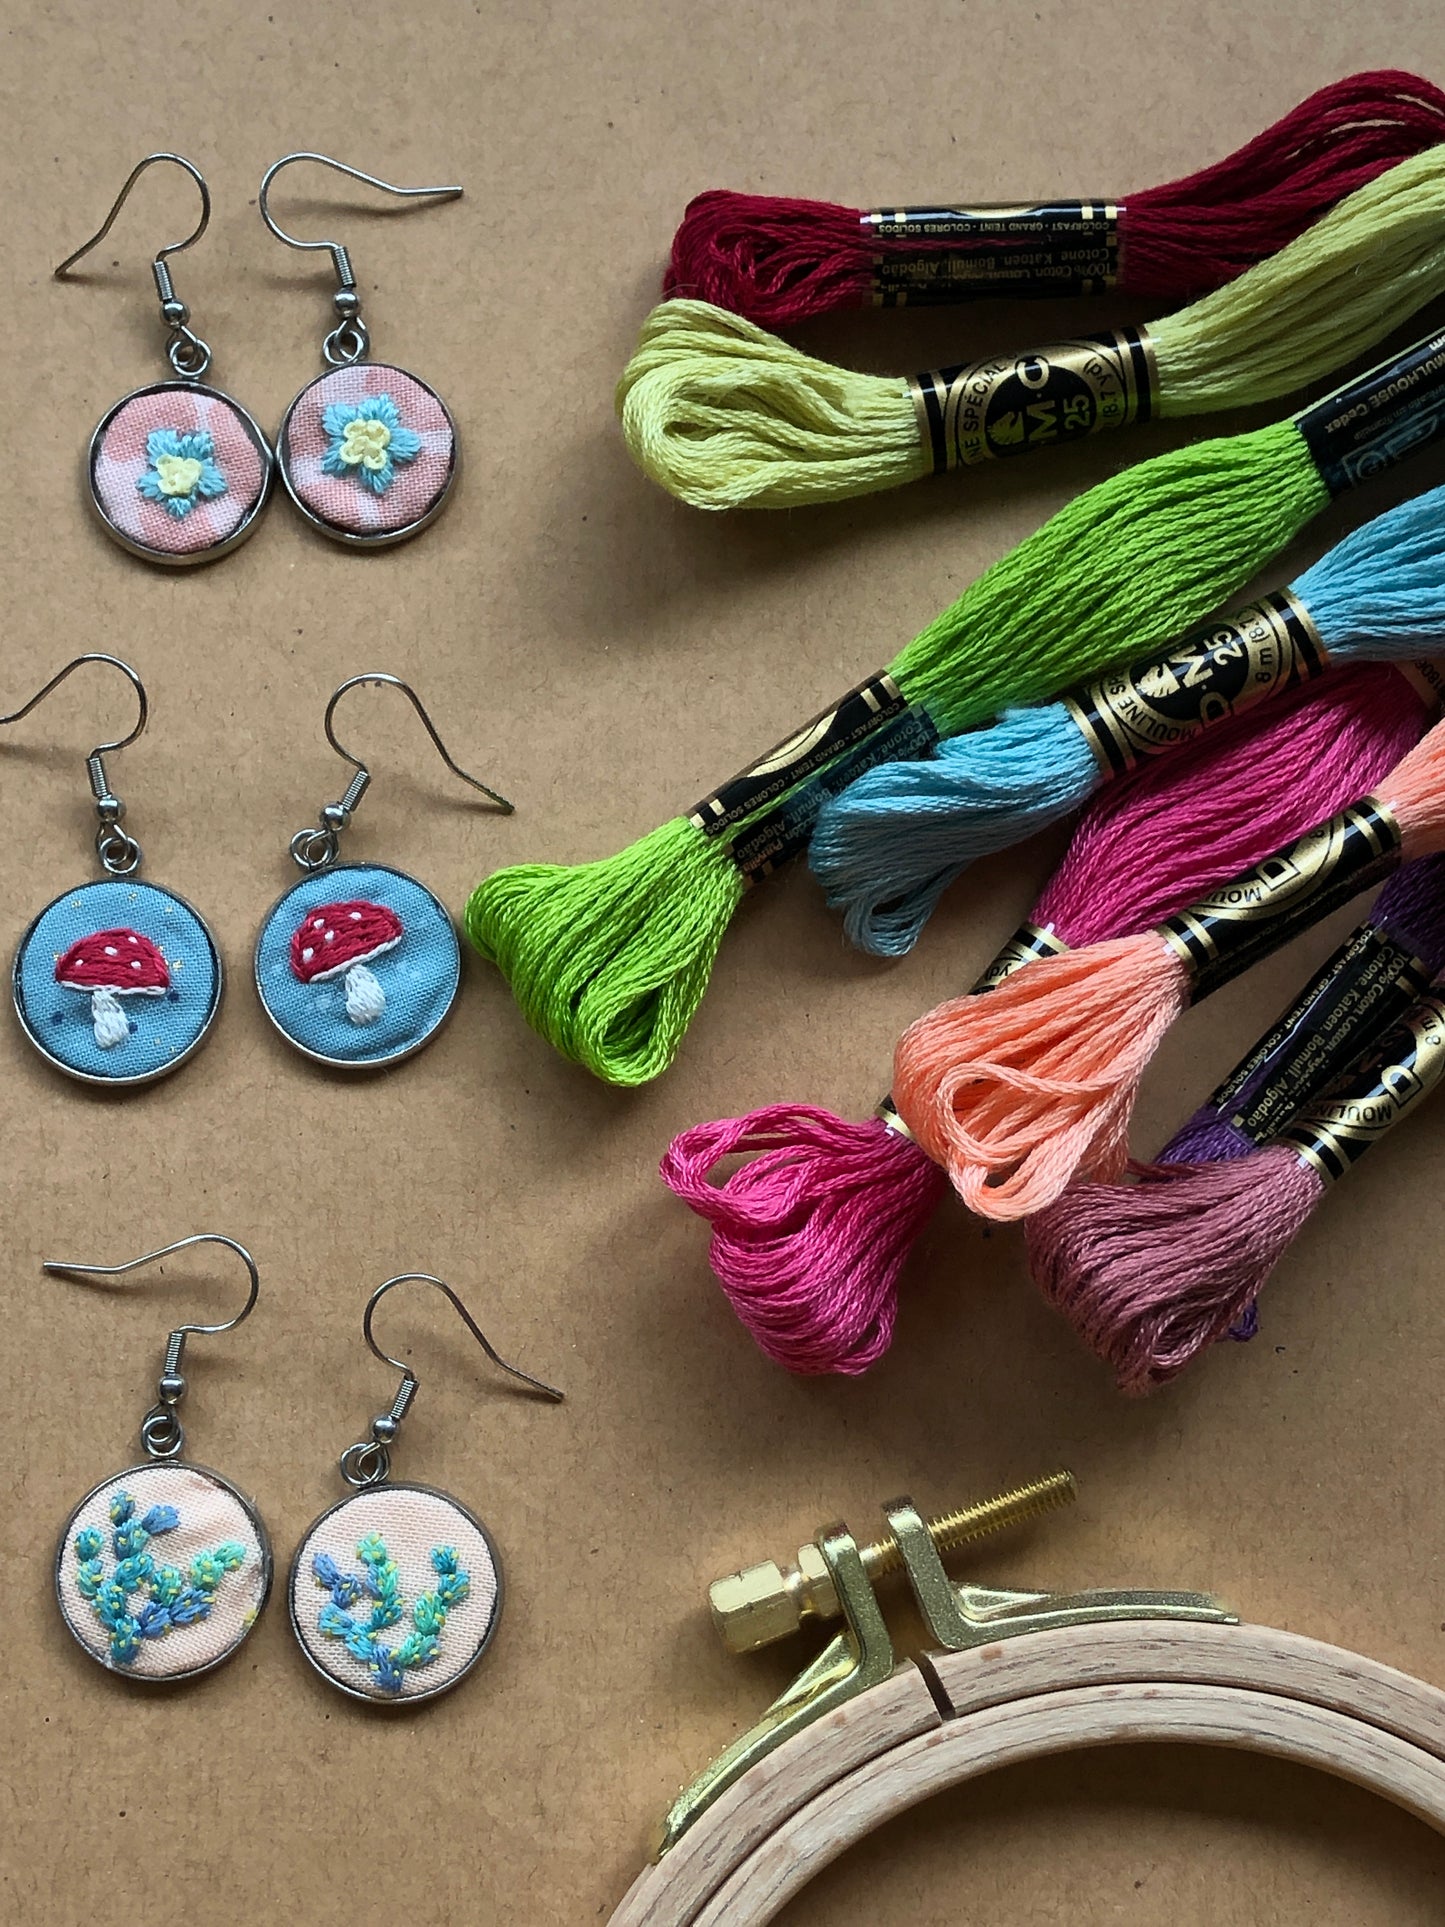 Embroidered Earrings - Beginner DIY Craft Kit